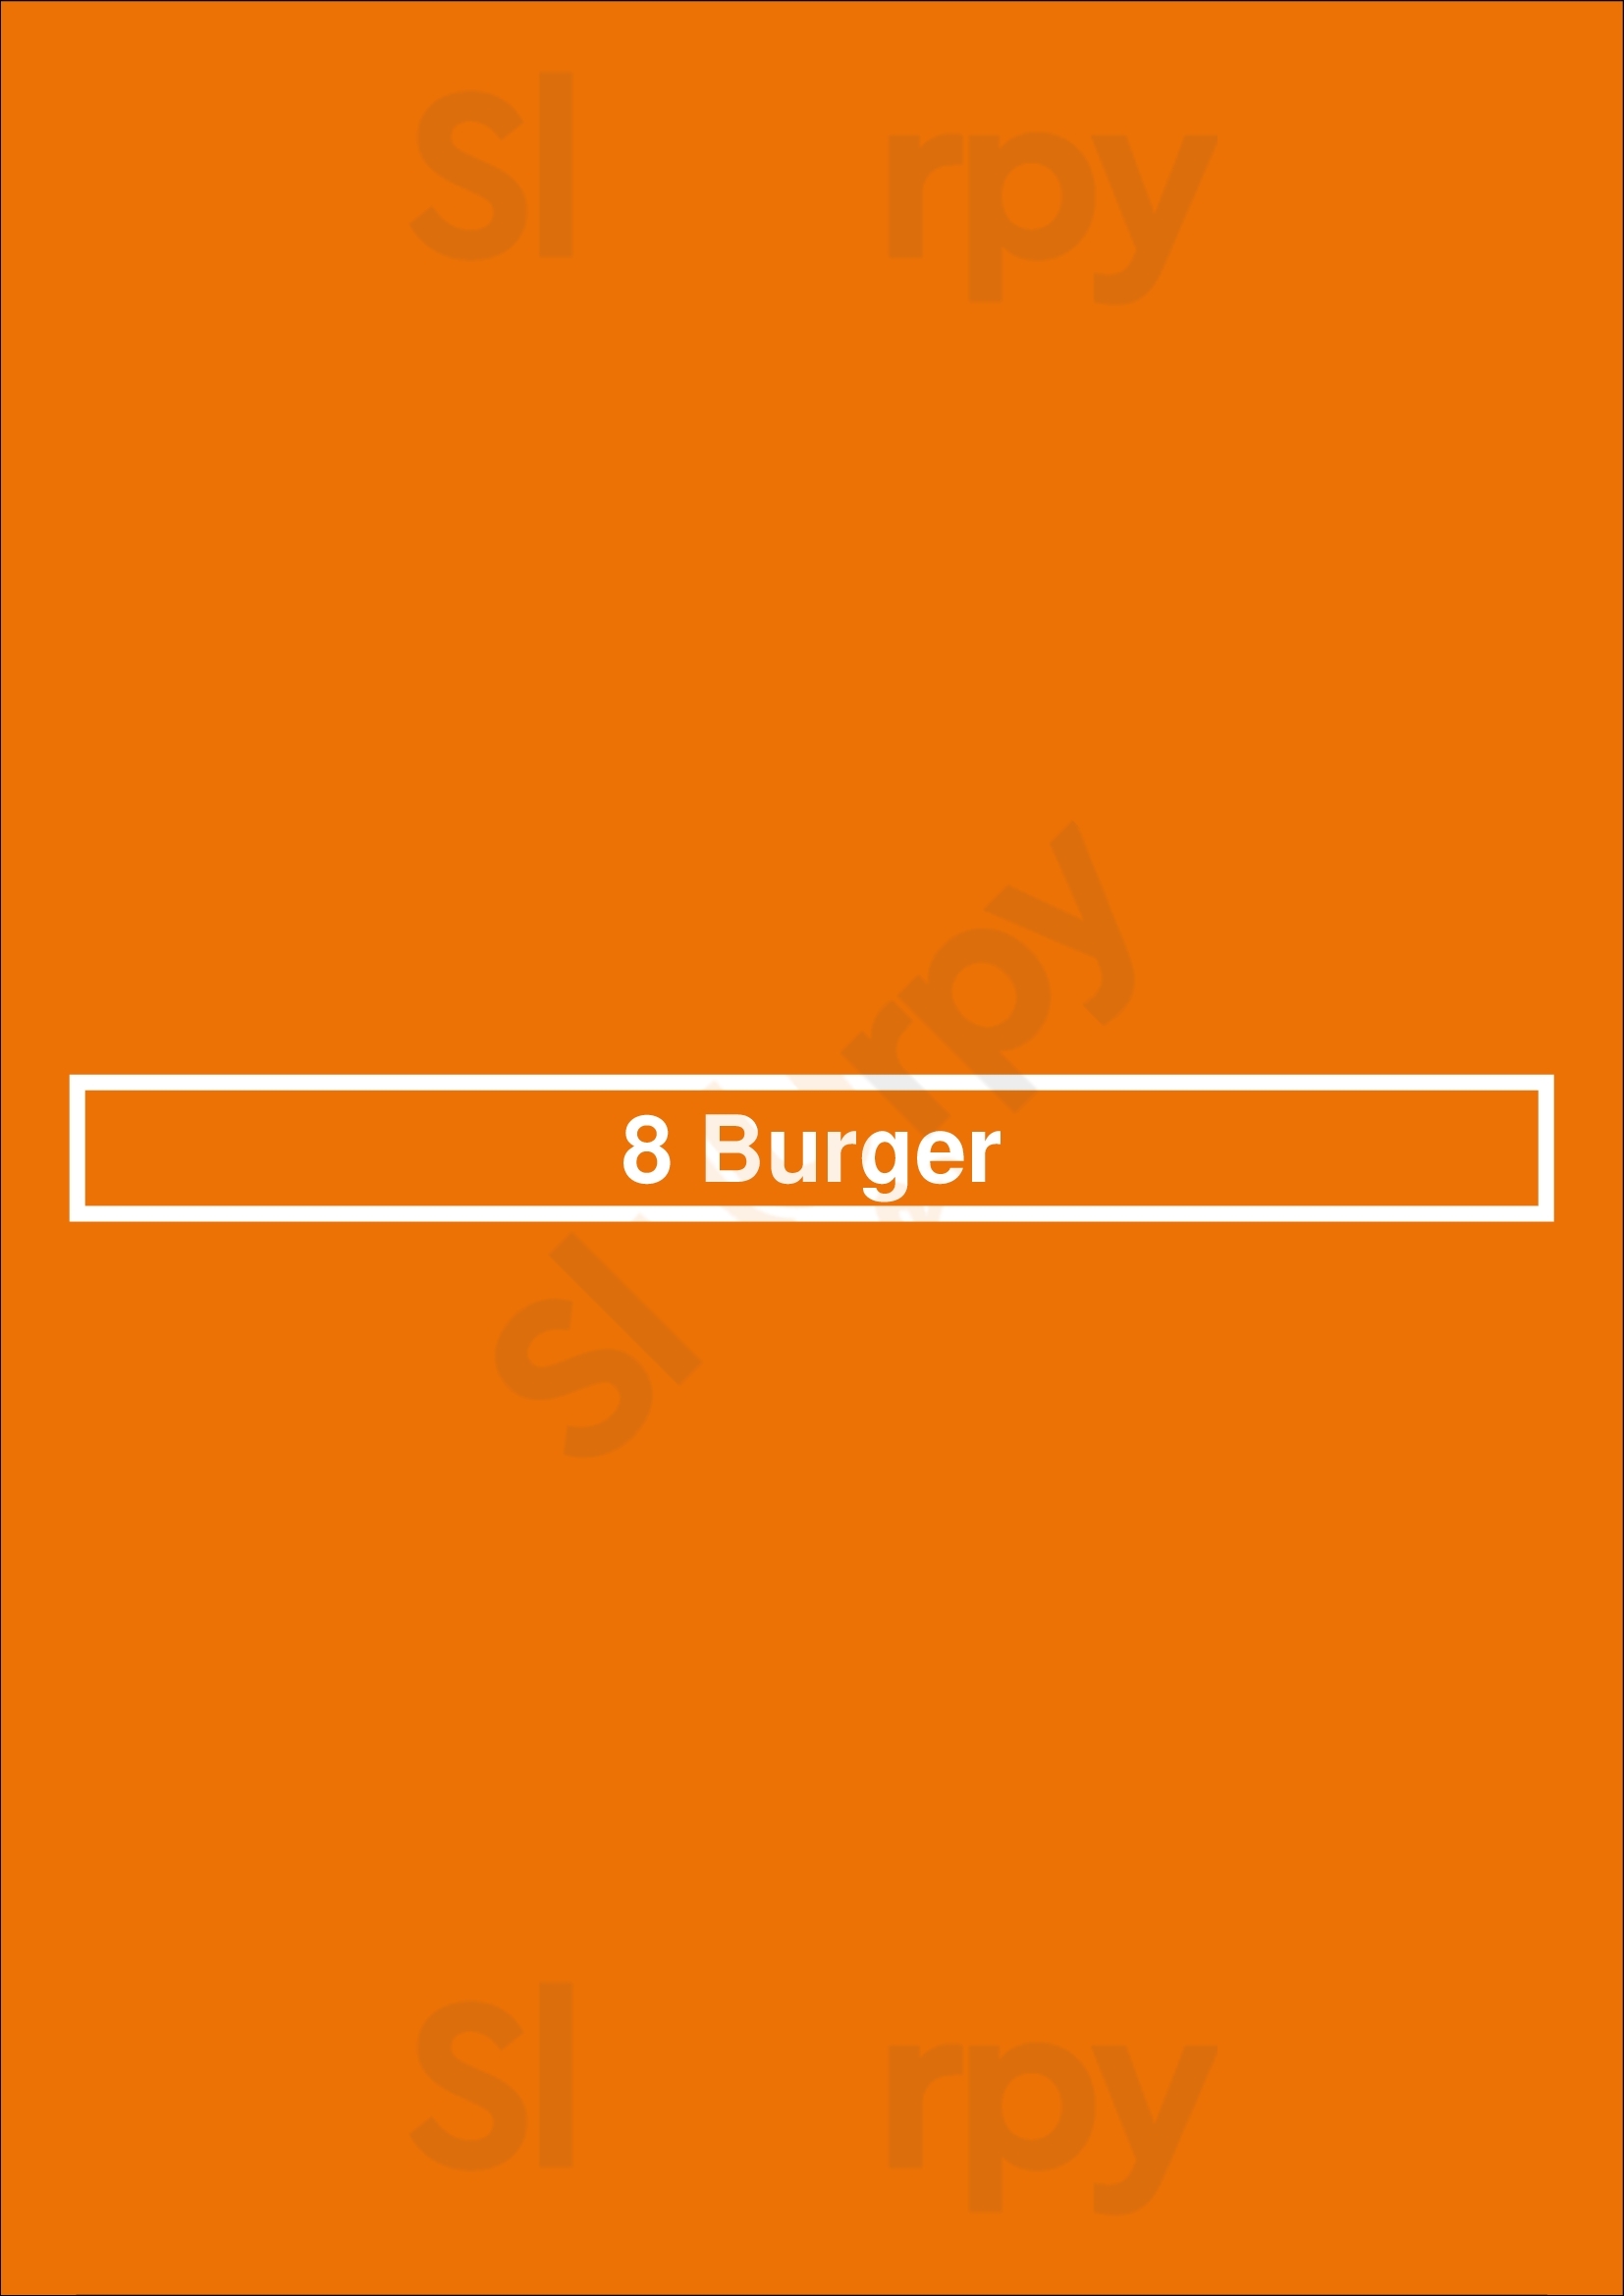 8 Burger Miami Menu - 1